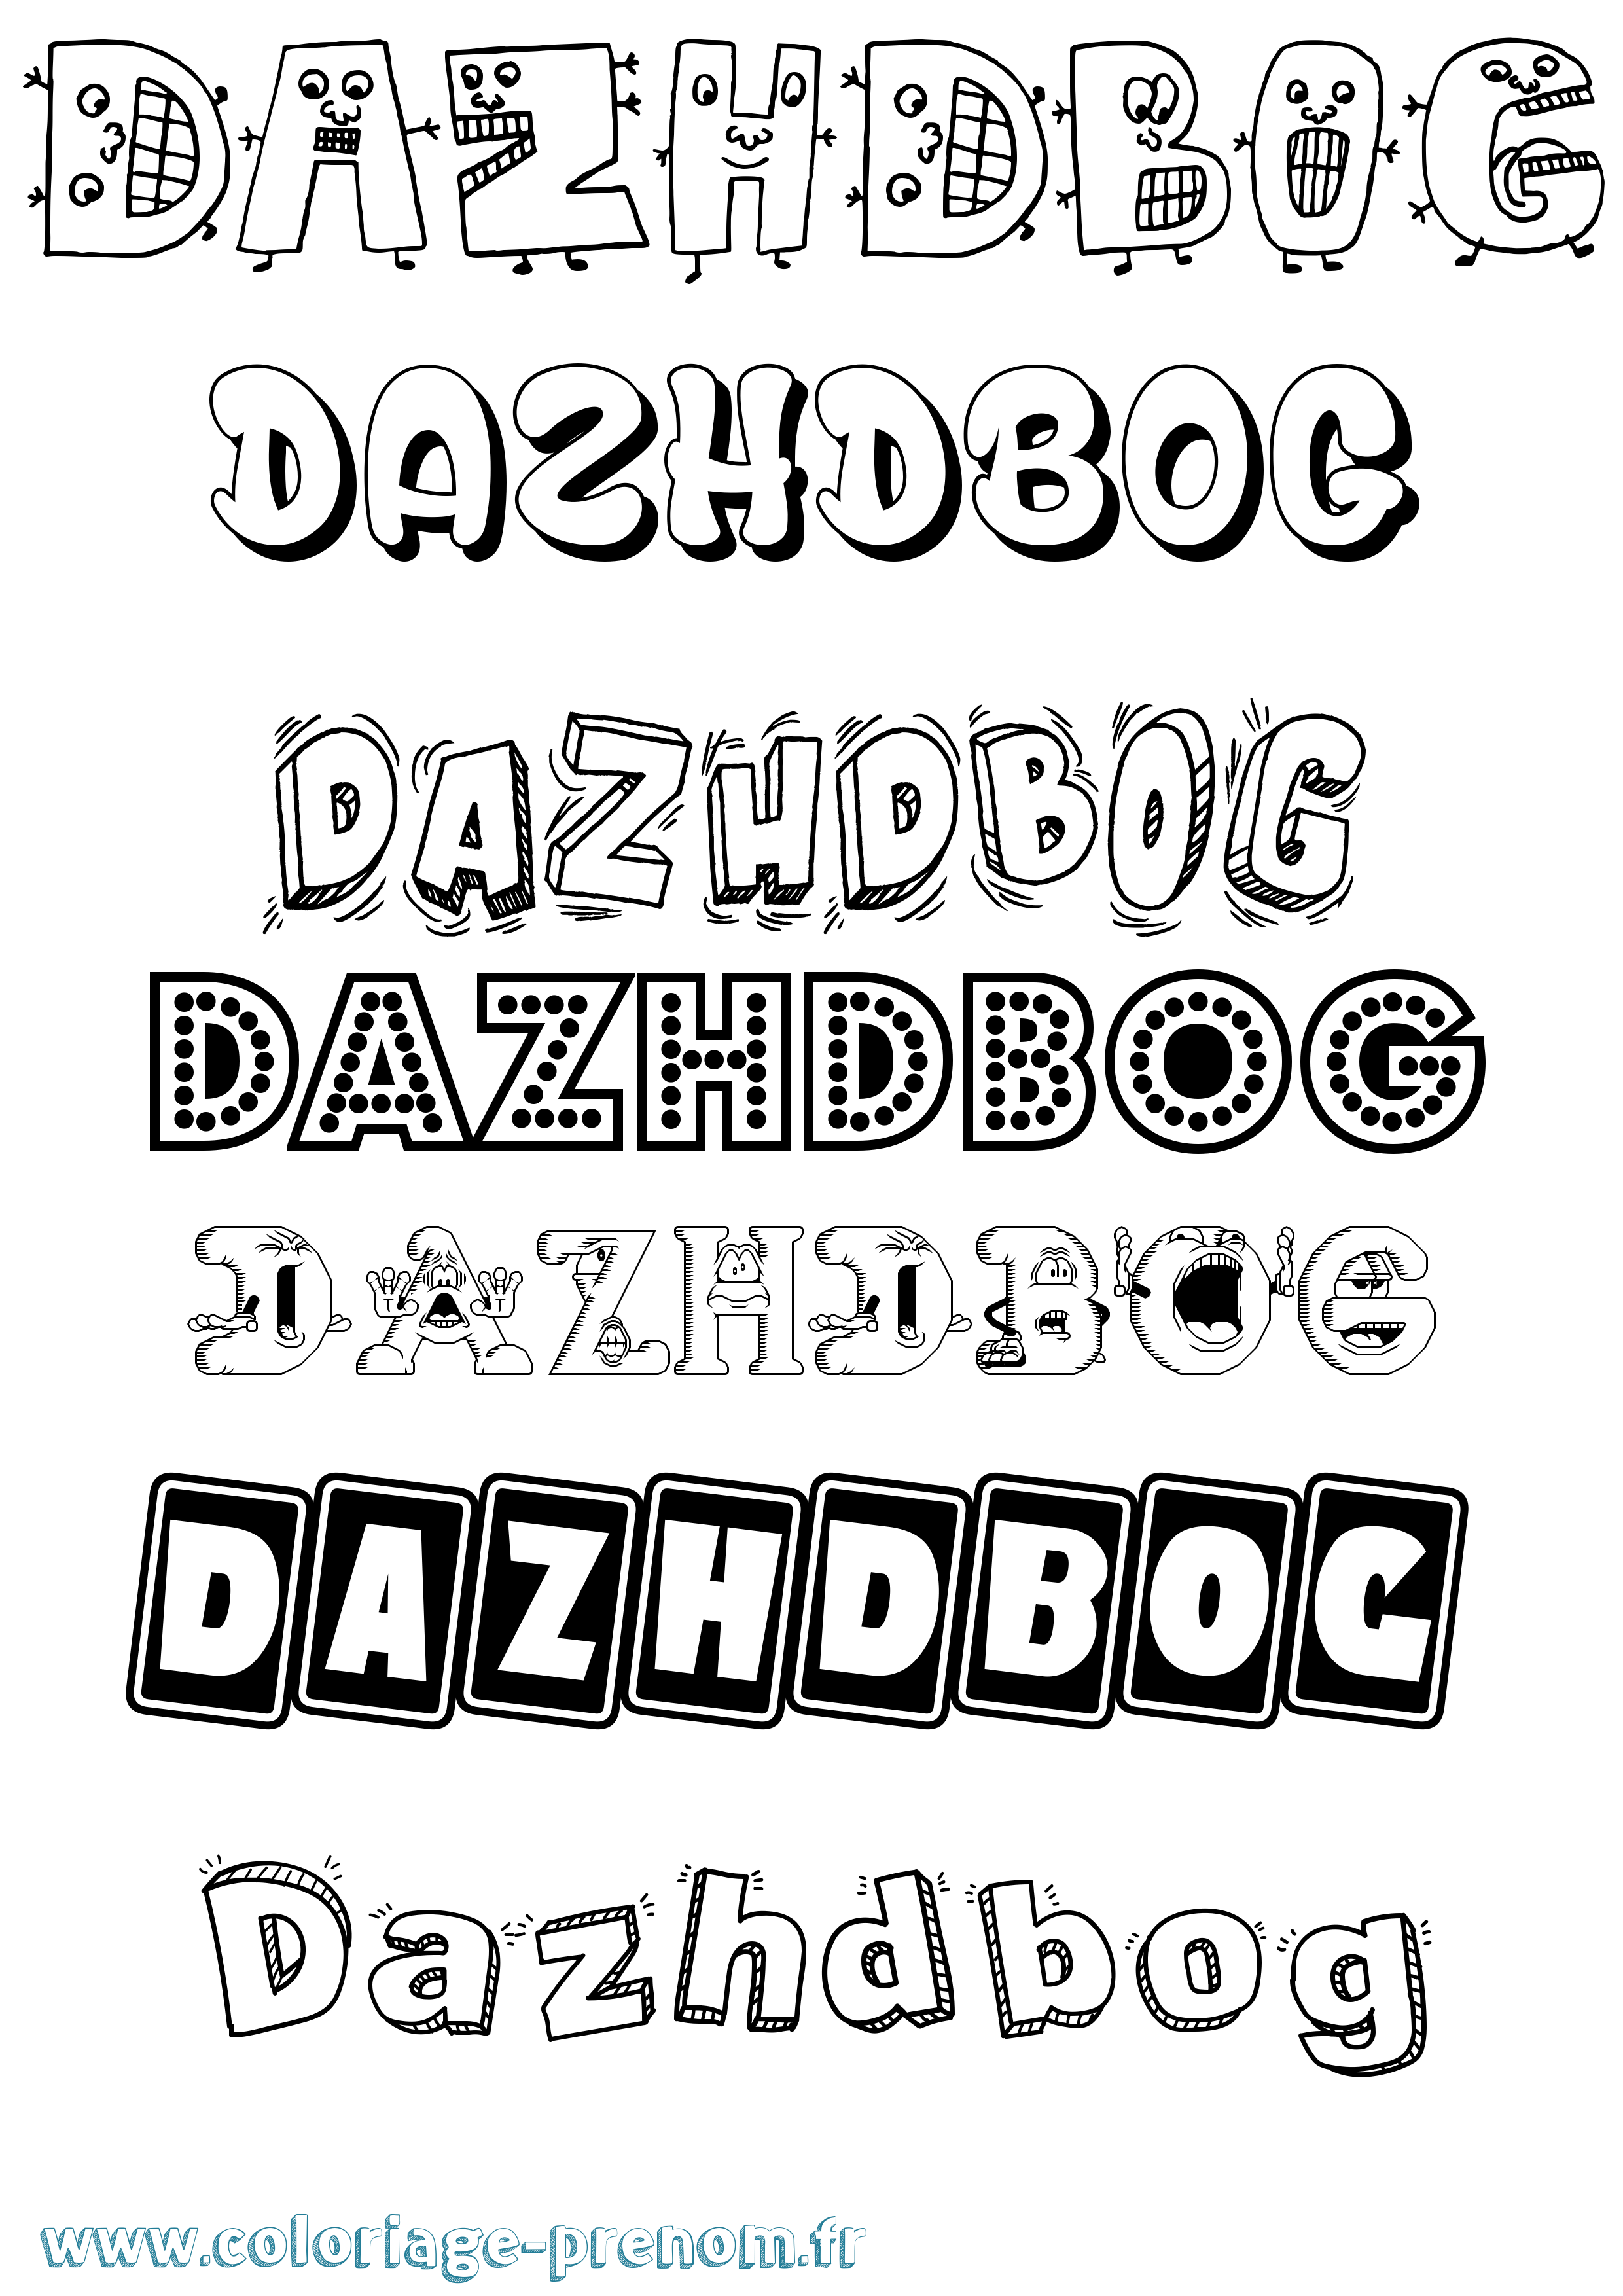 Coloriage prénom Dazhdbog Fun